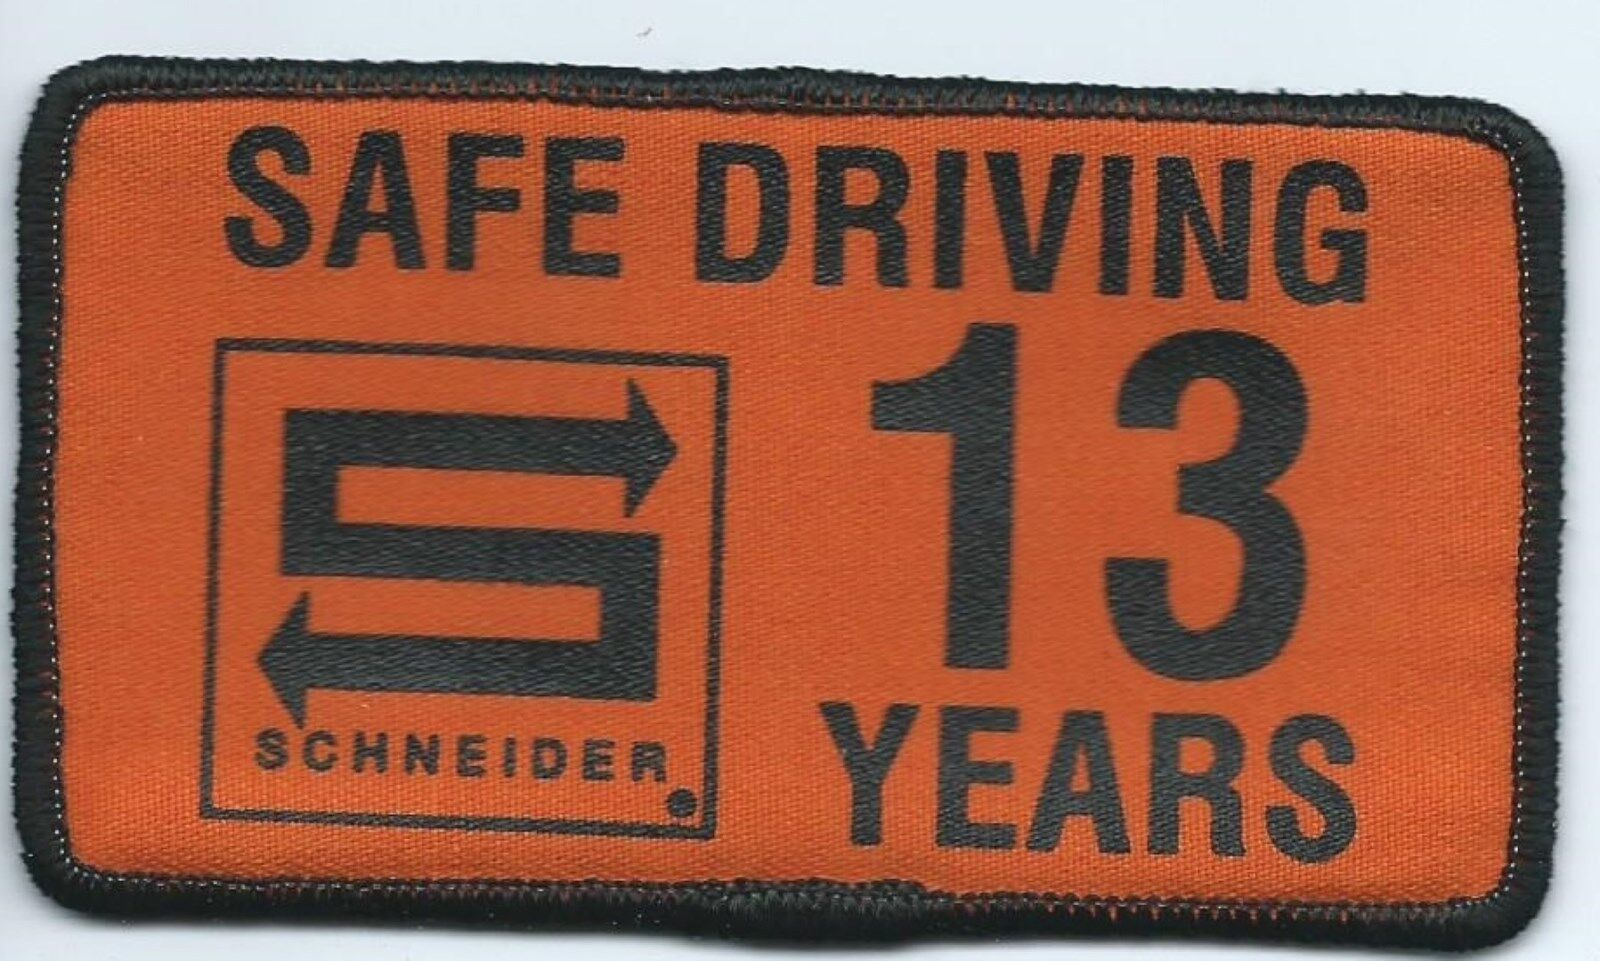 Schneider Transport truck driver patch safe driving 13 years, 2-1/2 X 4-1/2 